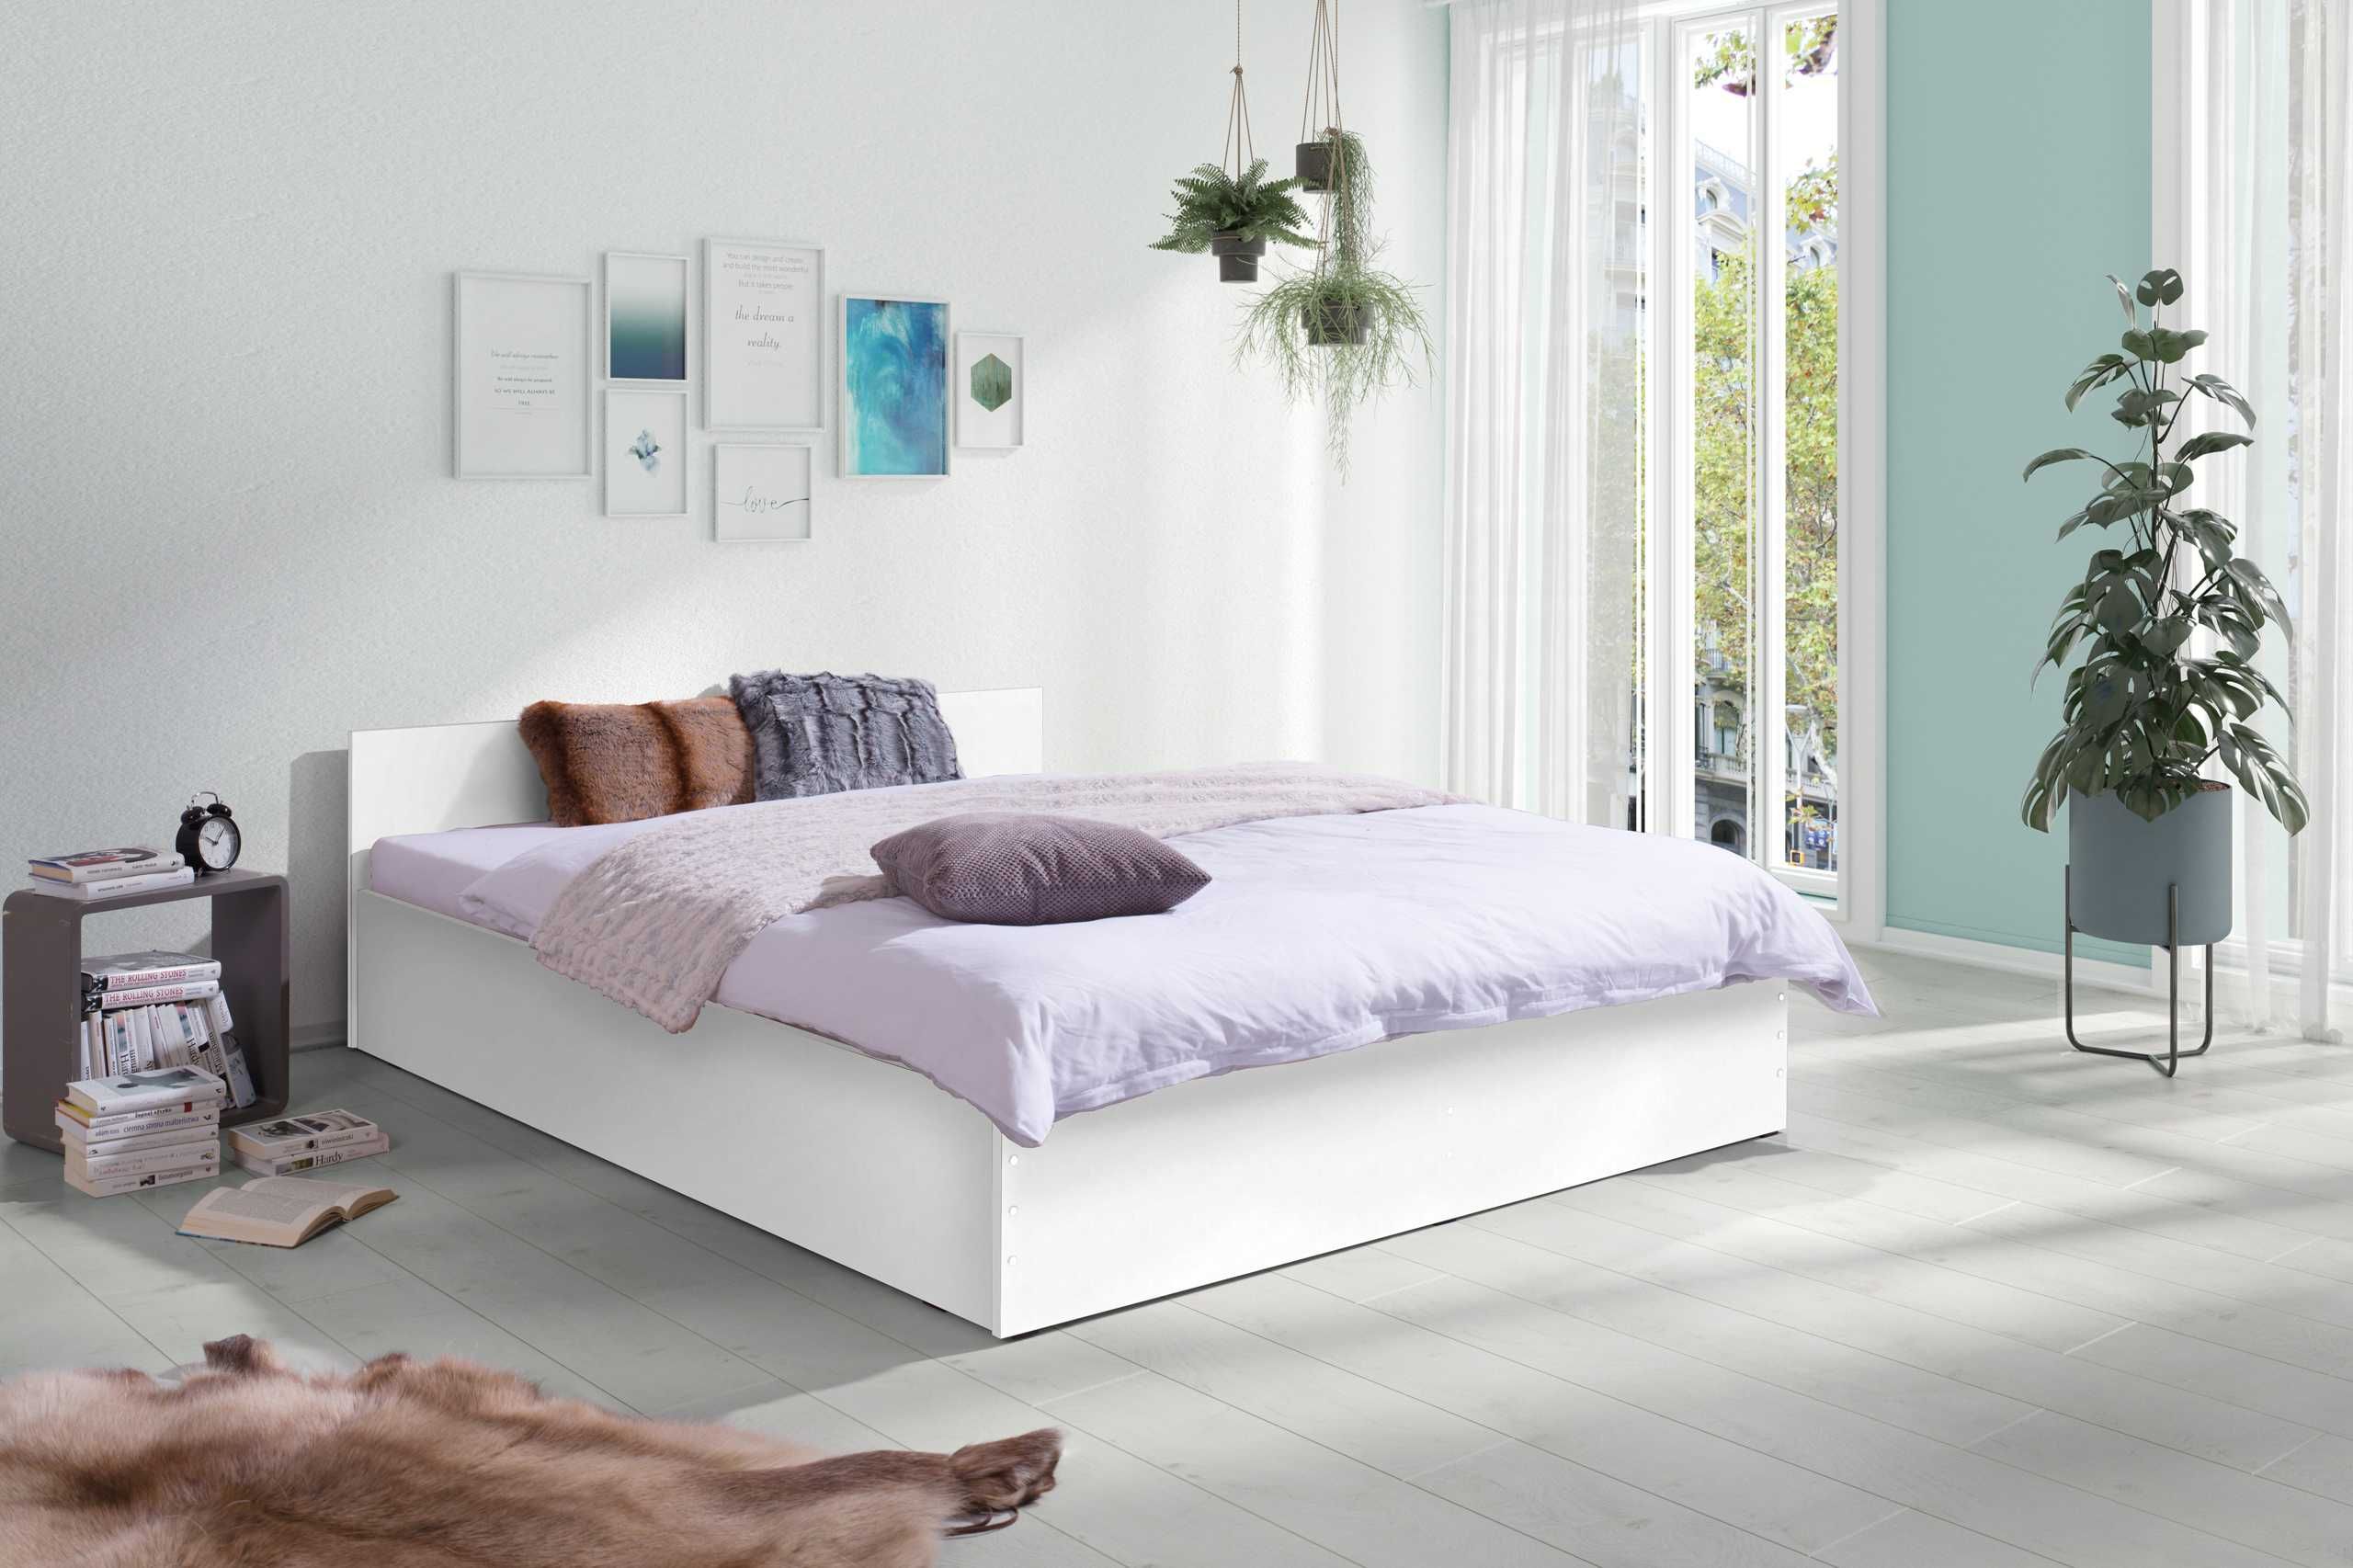 Nowe Łóżko z Materacem 160 x 200 Kompletne od Producenta Promocja